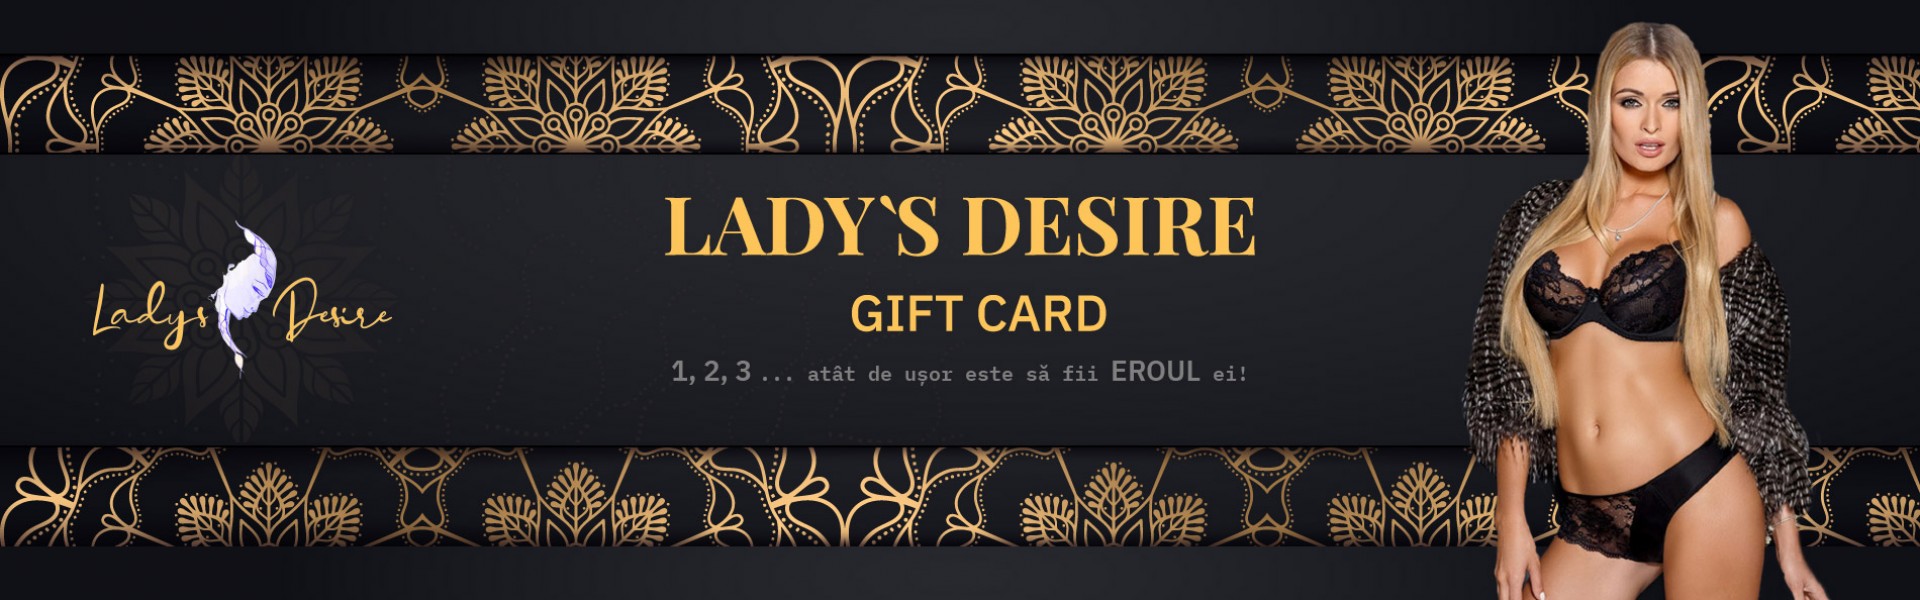 Ladysdesire.com